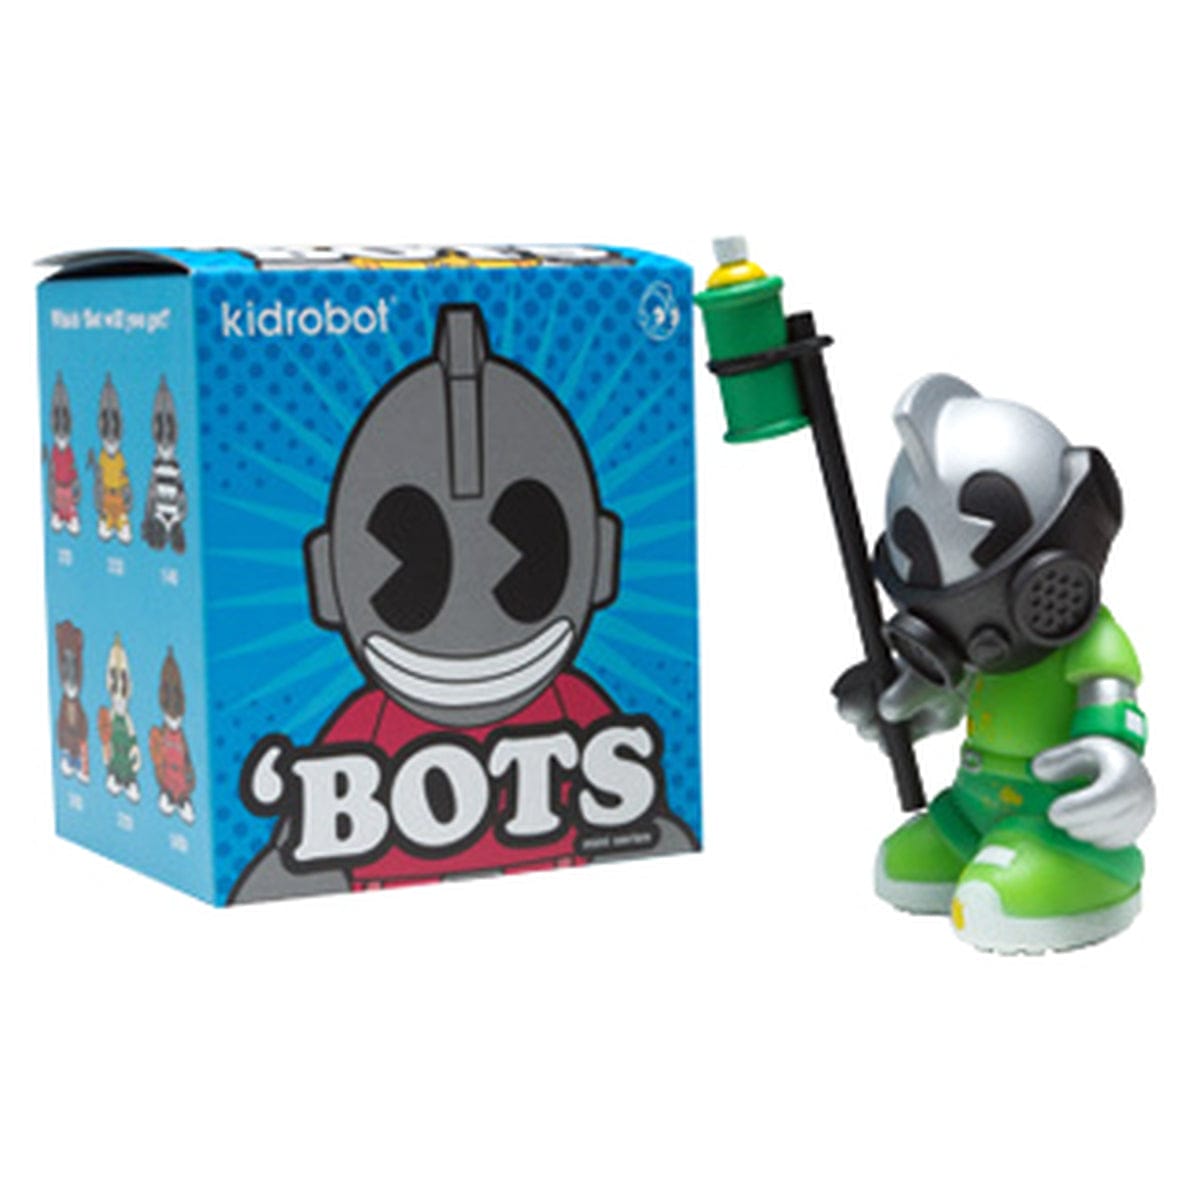 NECA Kidrobot Bots 3" Vinyl Toy Blind Box Kawaii Gifts 883975099473